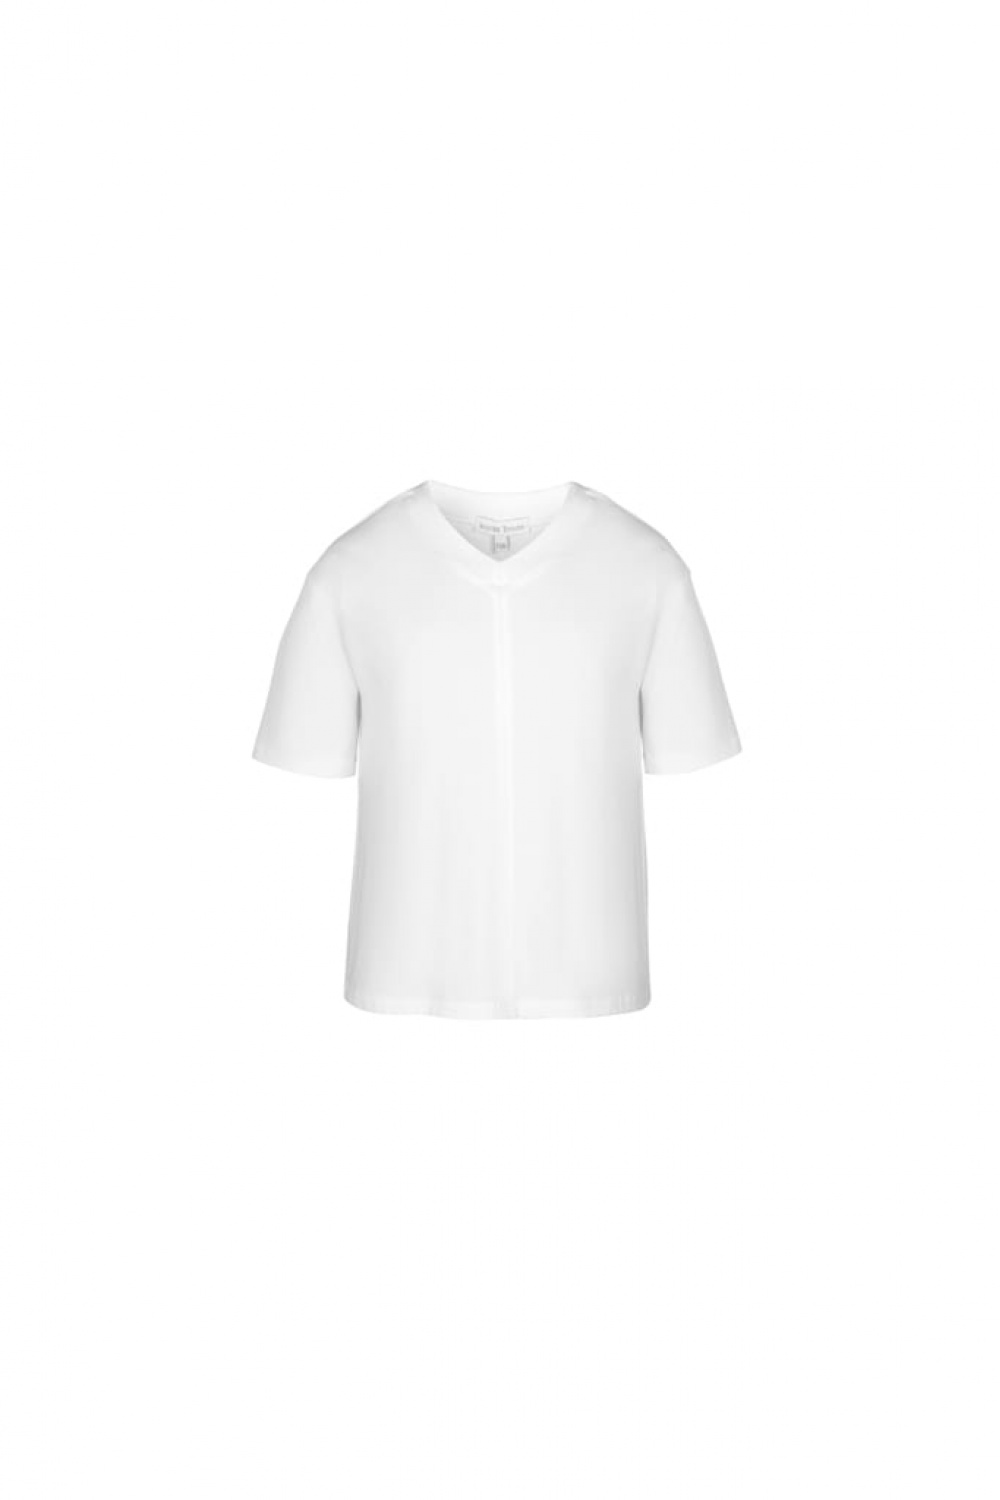 Базовая футболка с V-образным вырезом (SSLWG-038-24600A-201) Silver spoon